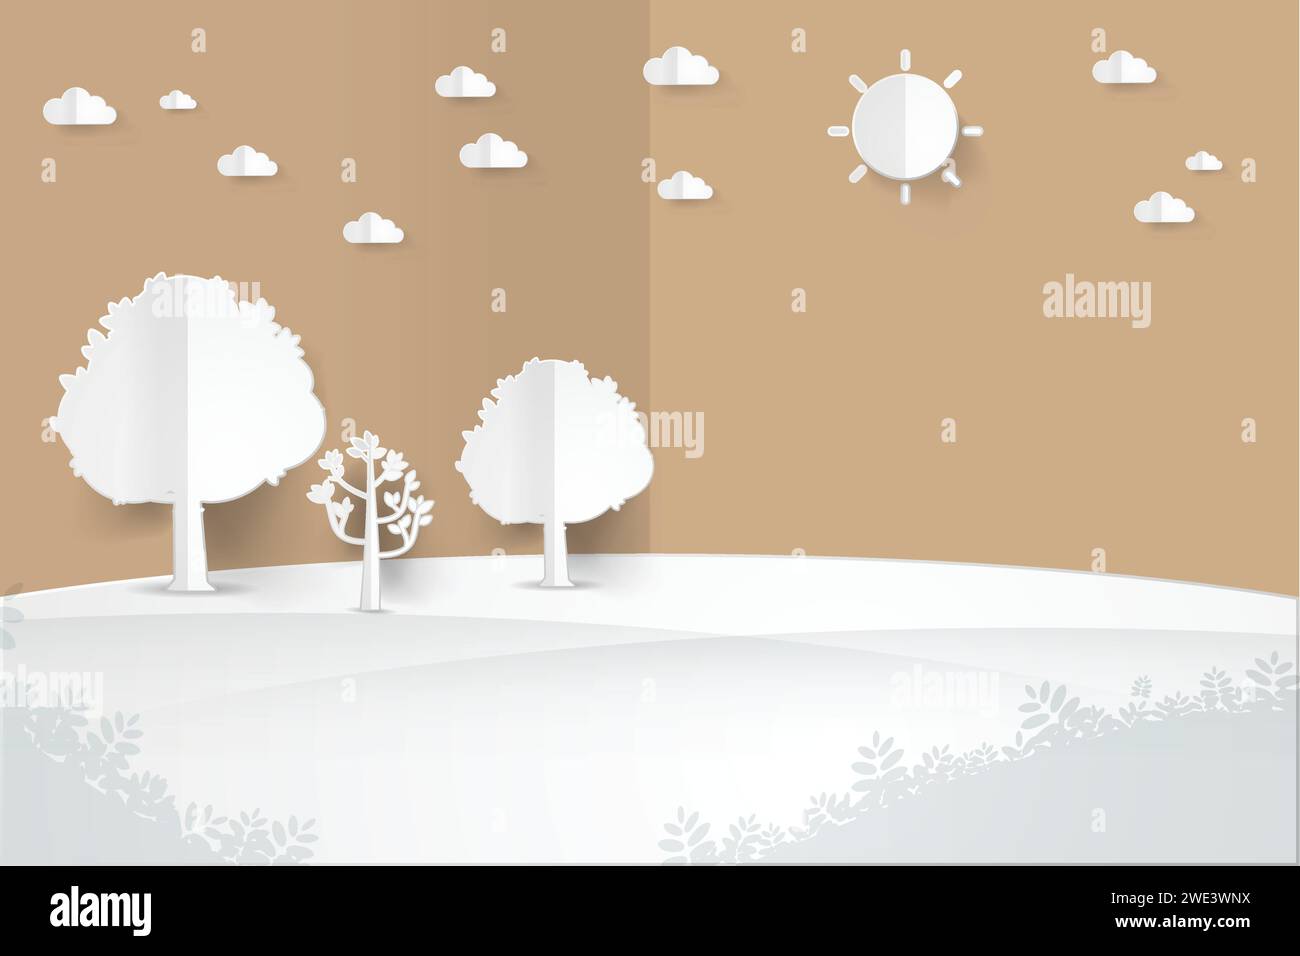 minimalist landscape with tree,hill,sun,cloud landscape background, paper art style vector illustration. Stock Vector